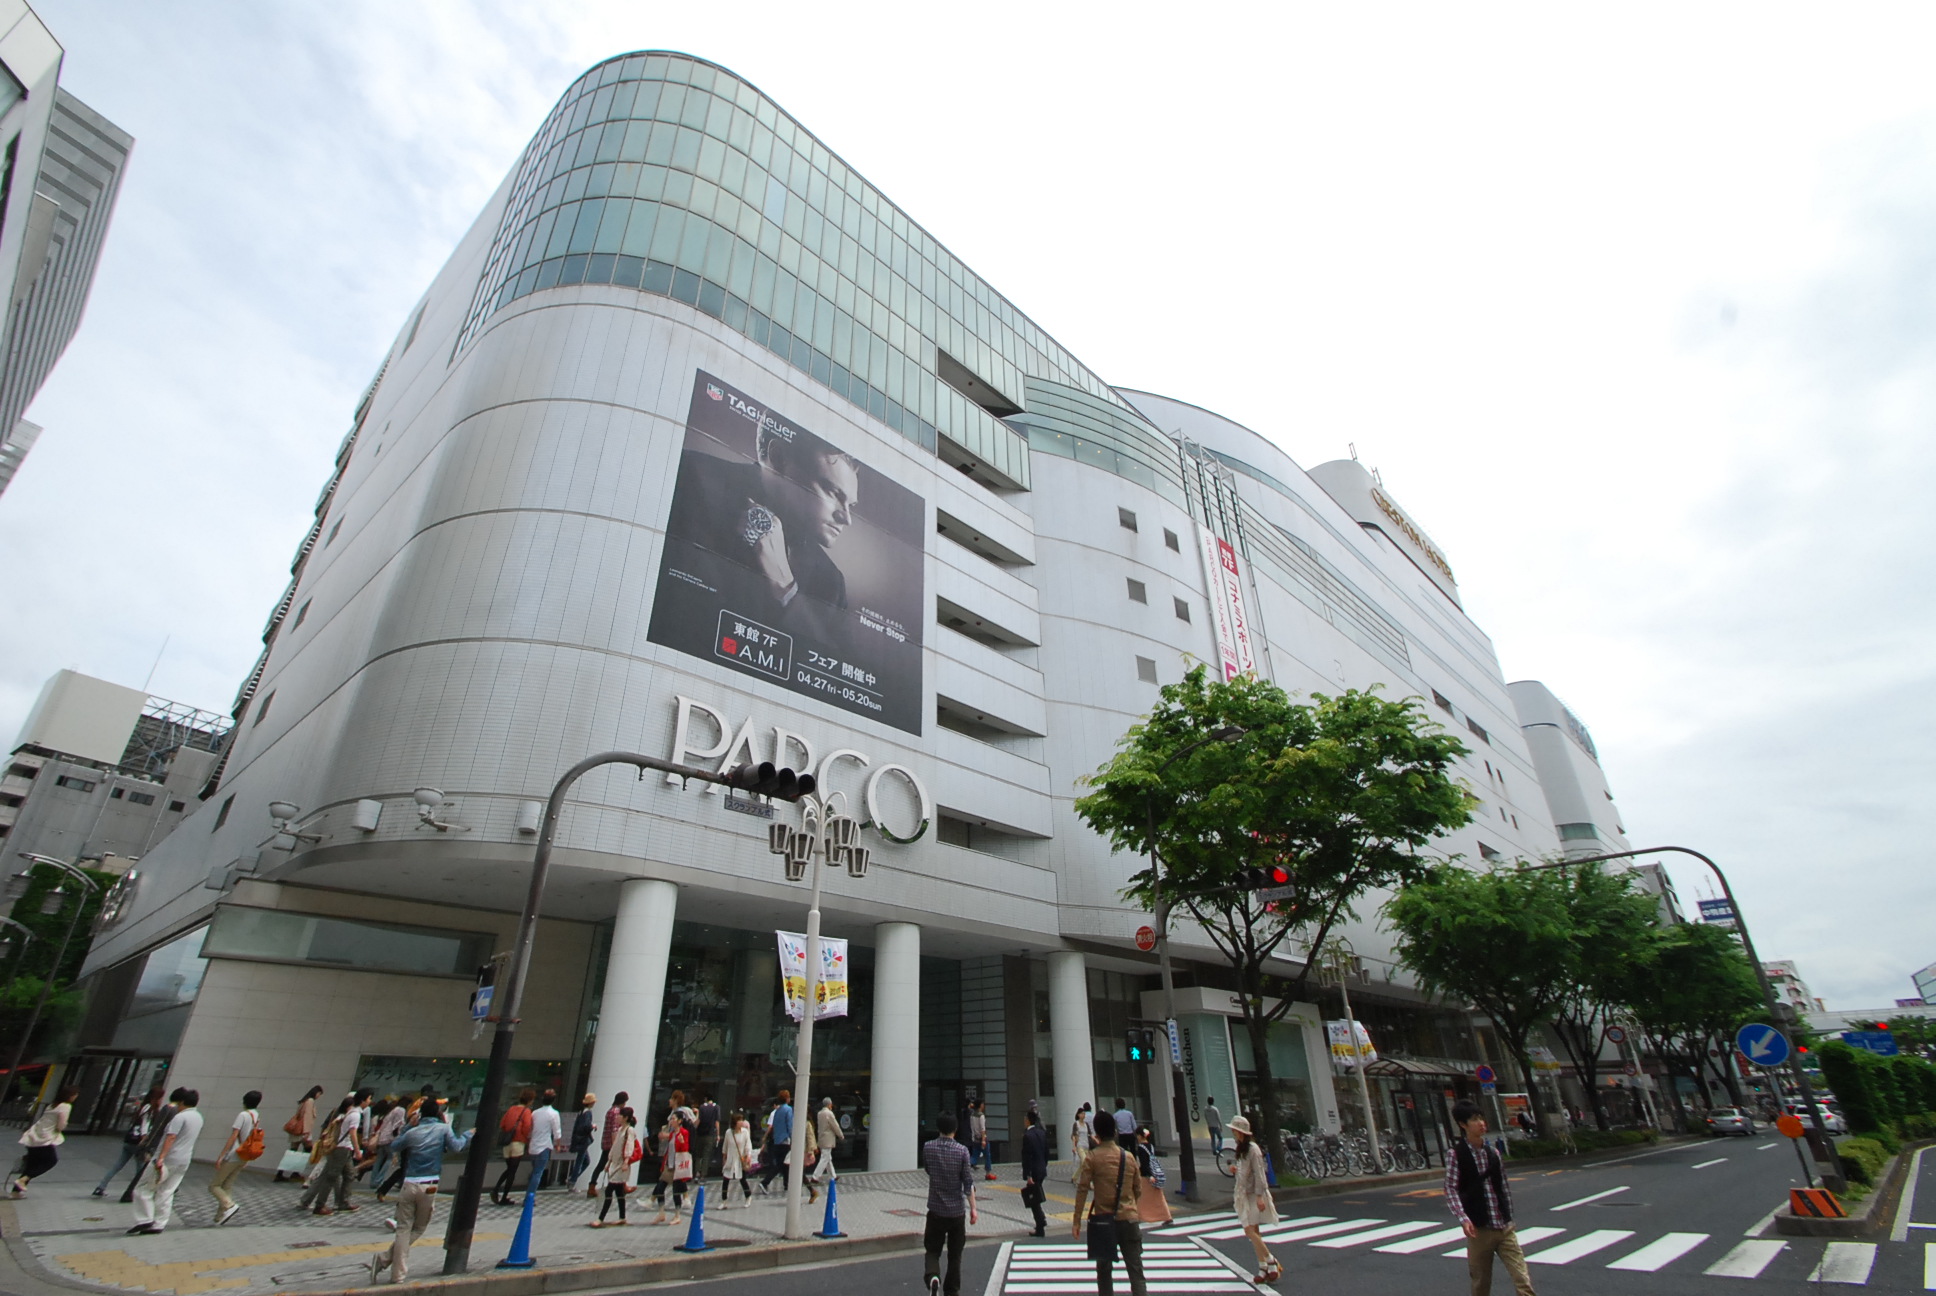 Shopping centre. 186m to Nagoya Parco (shopping center)